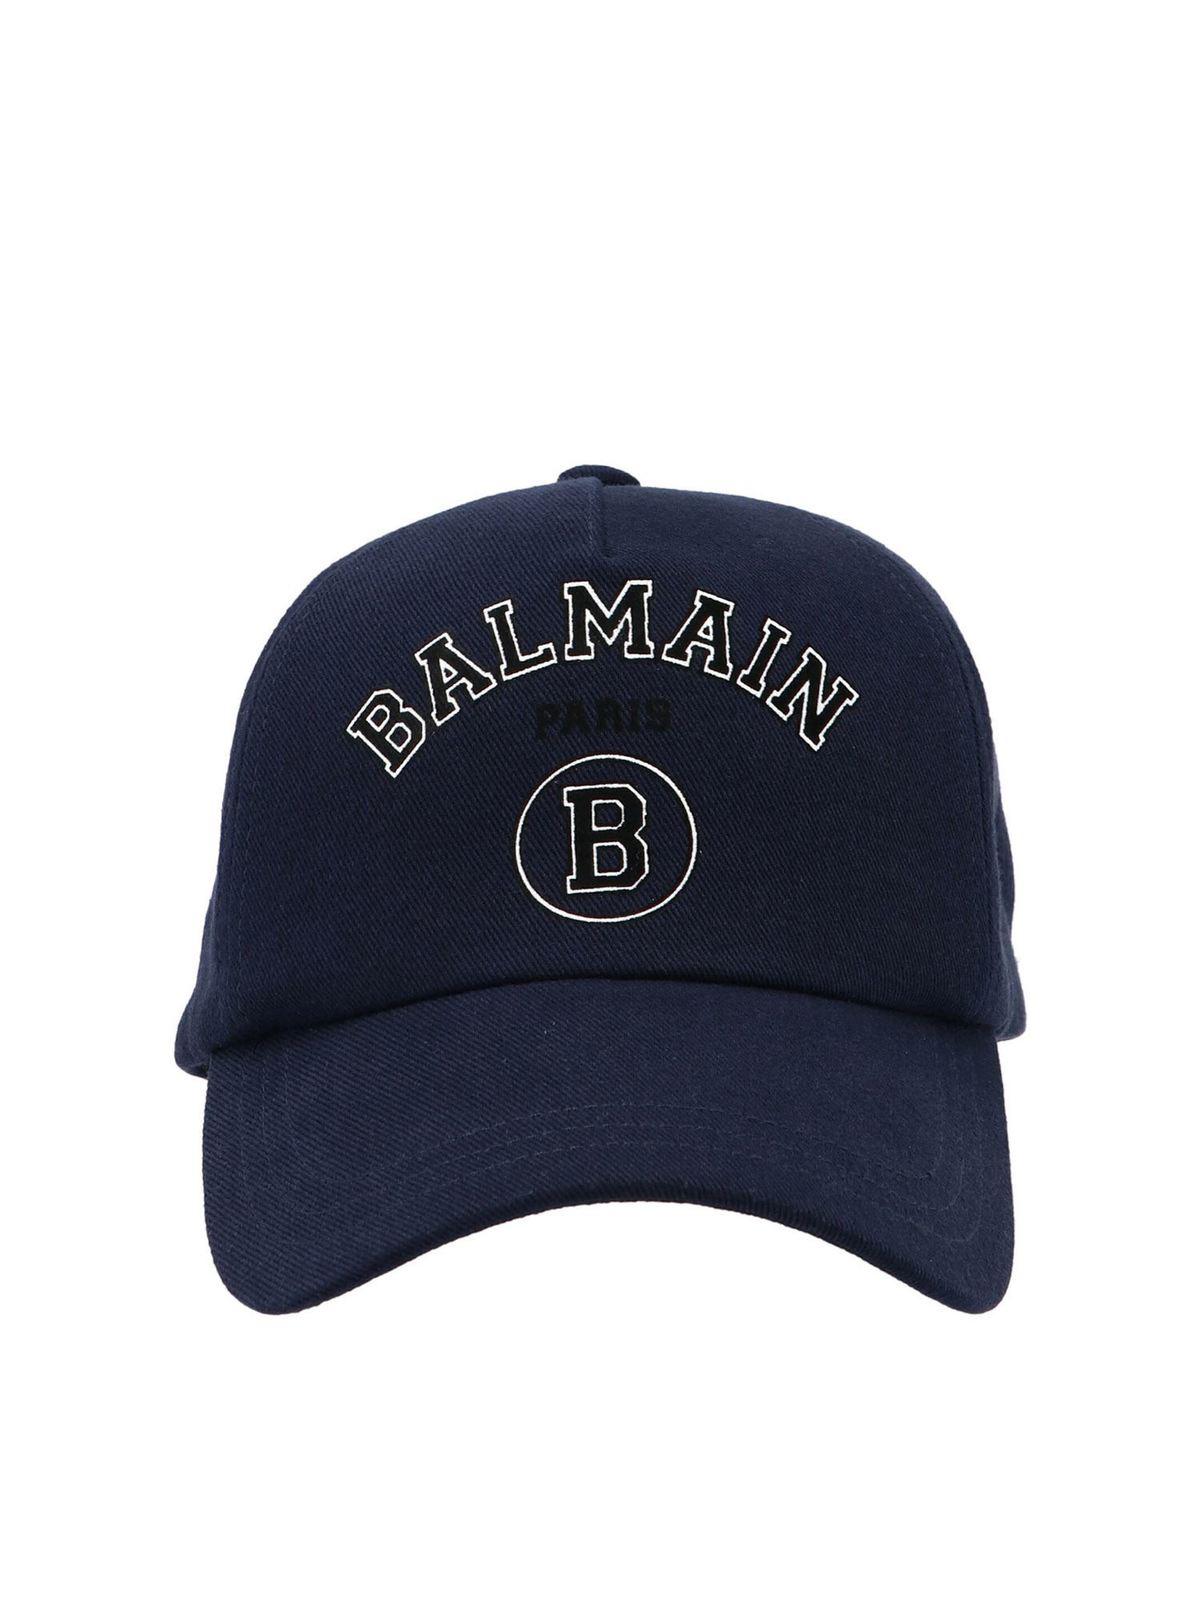 Balmain - Printed logo cap - hats & caps - VH1XA000B0156UB | iKRIX.com